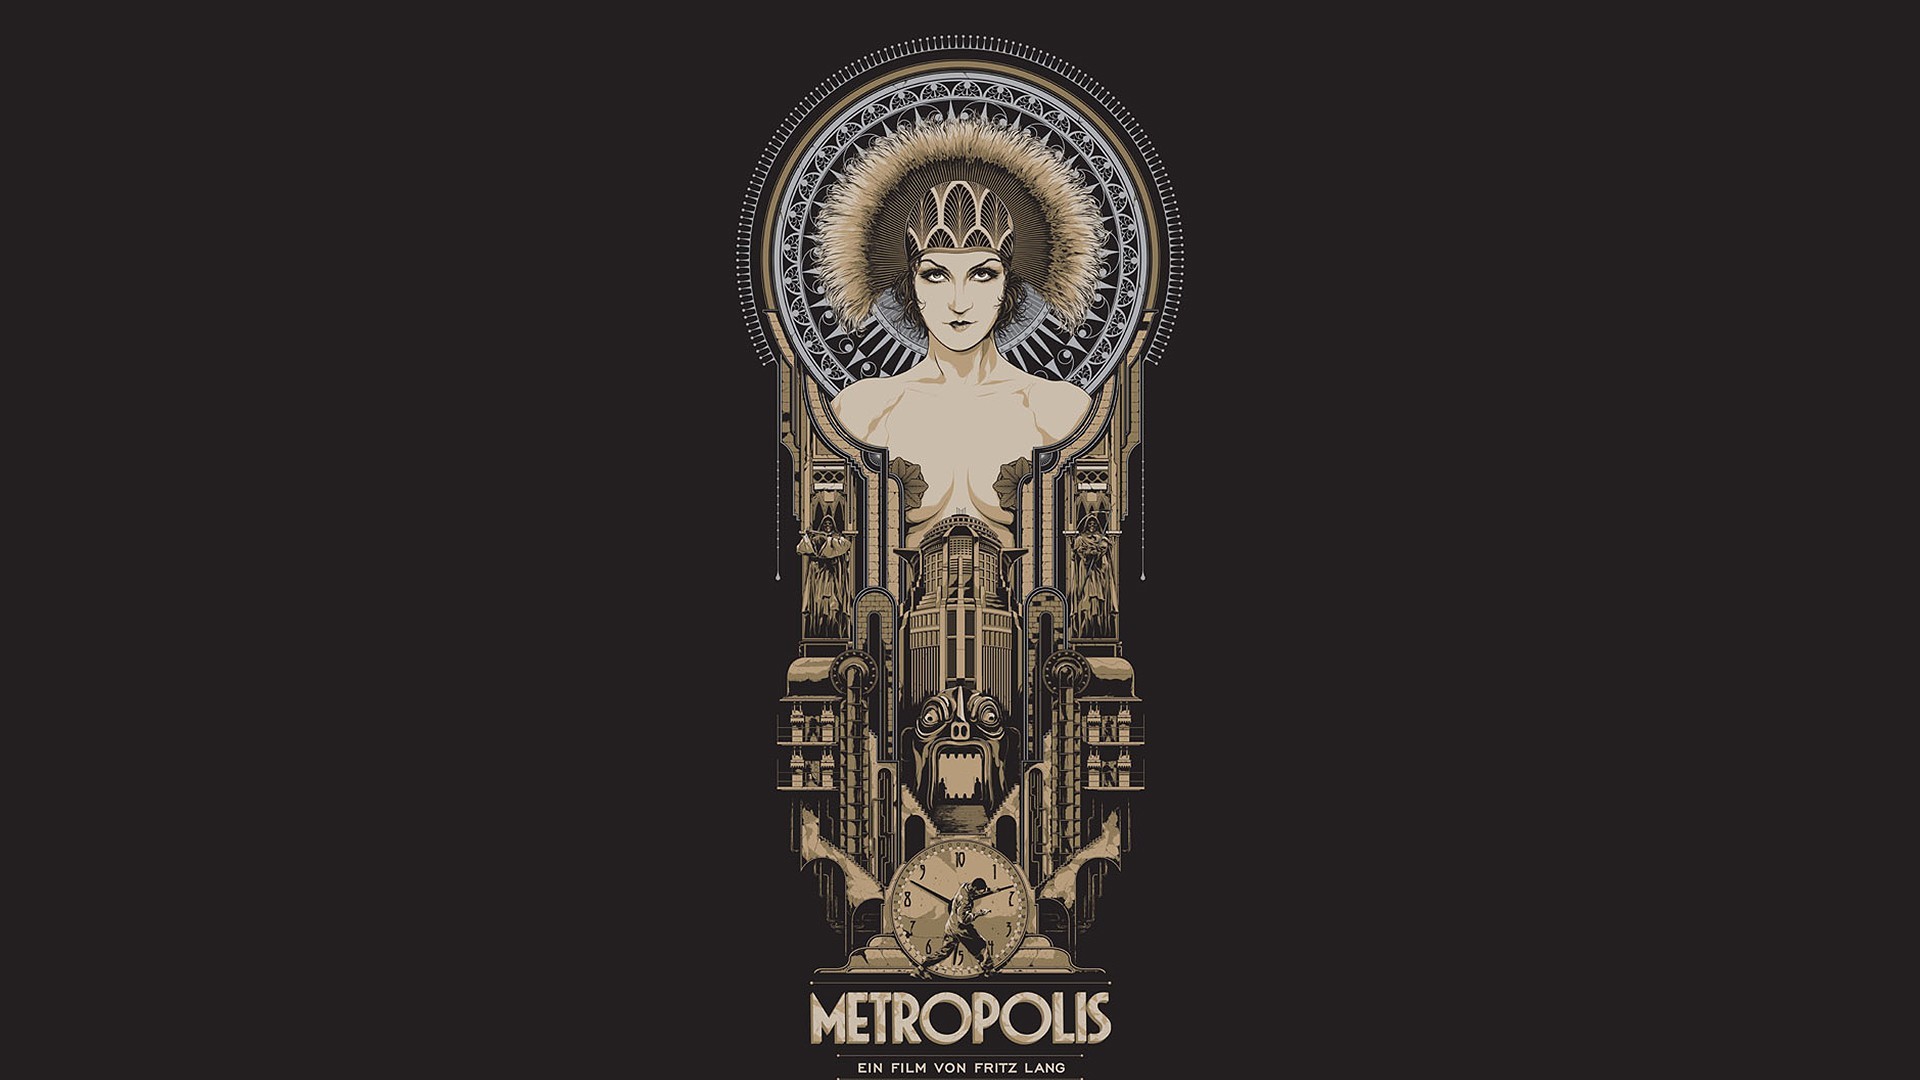 General 1920x1080 metropolis  illustration dark movie poster movies beige simple background boobs Metropolis (1927)